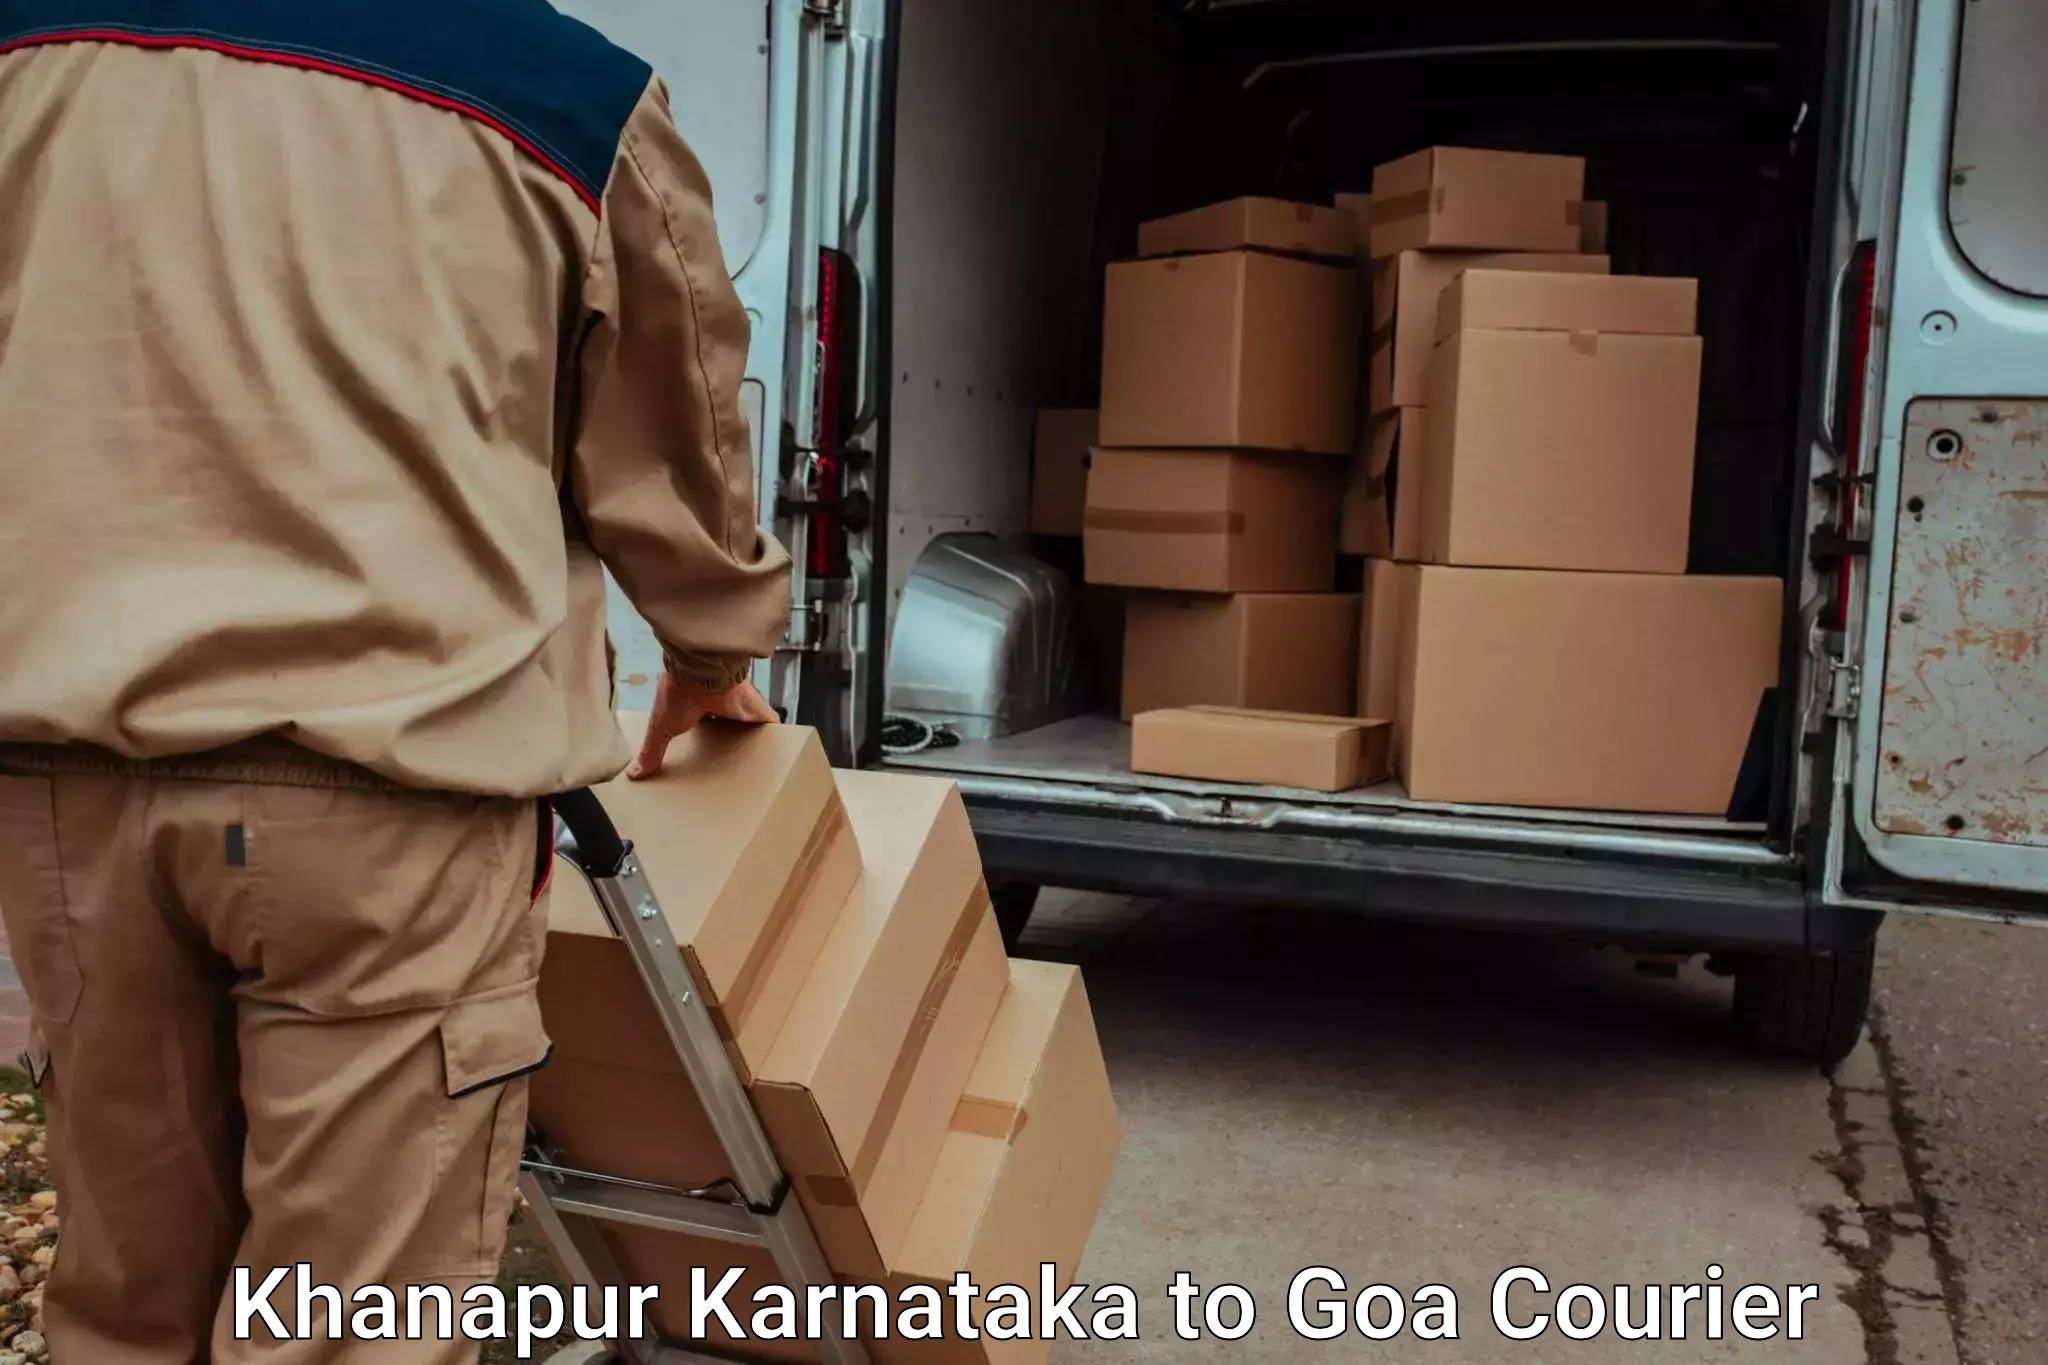 Instant baggage transport quote Khanapur Karnataka to South Goa